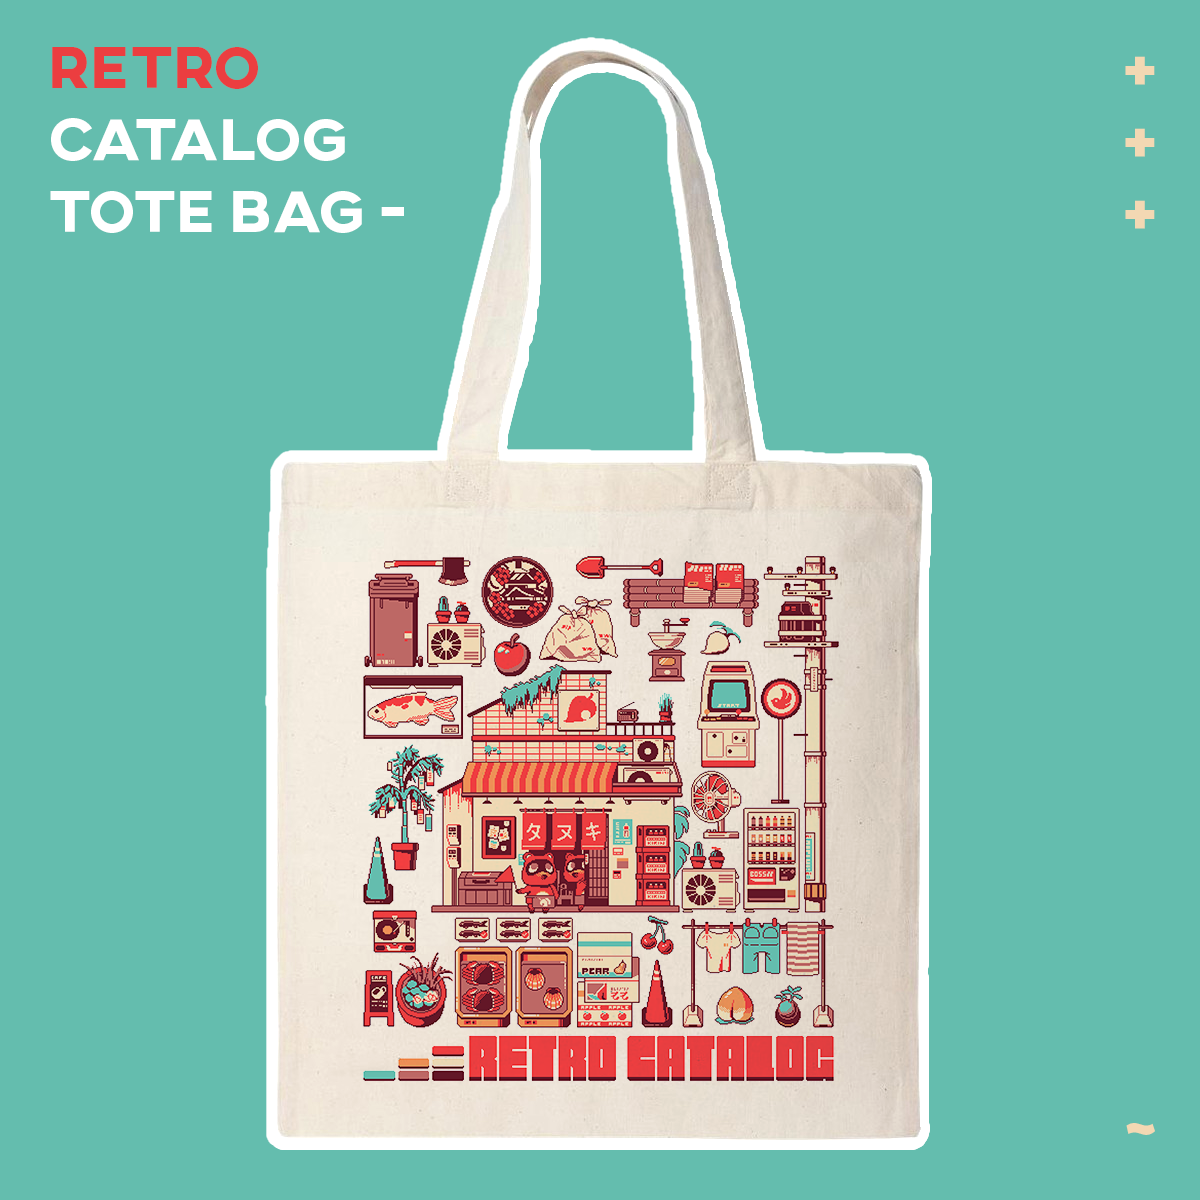 [OnionLabs] ACNH Retro Catalog Tote Bag